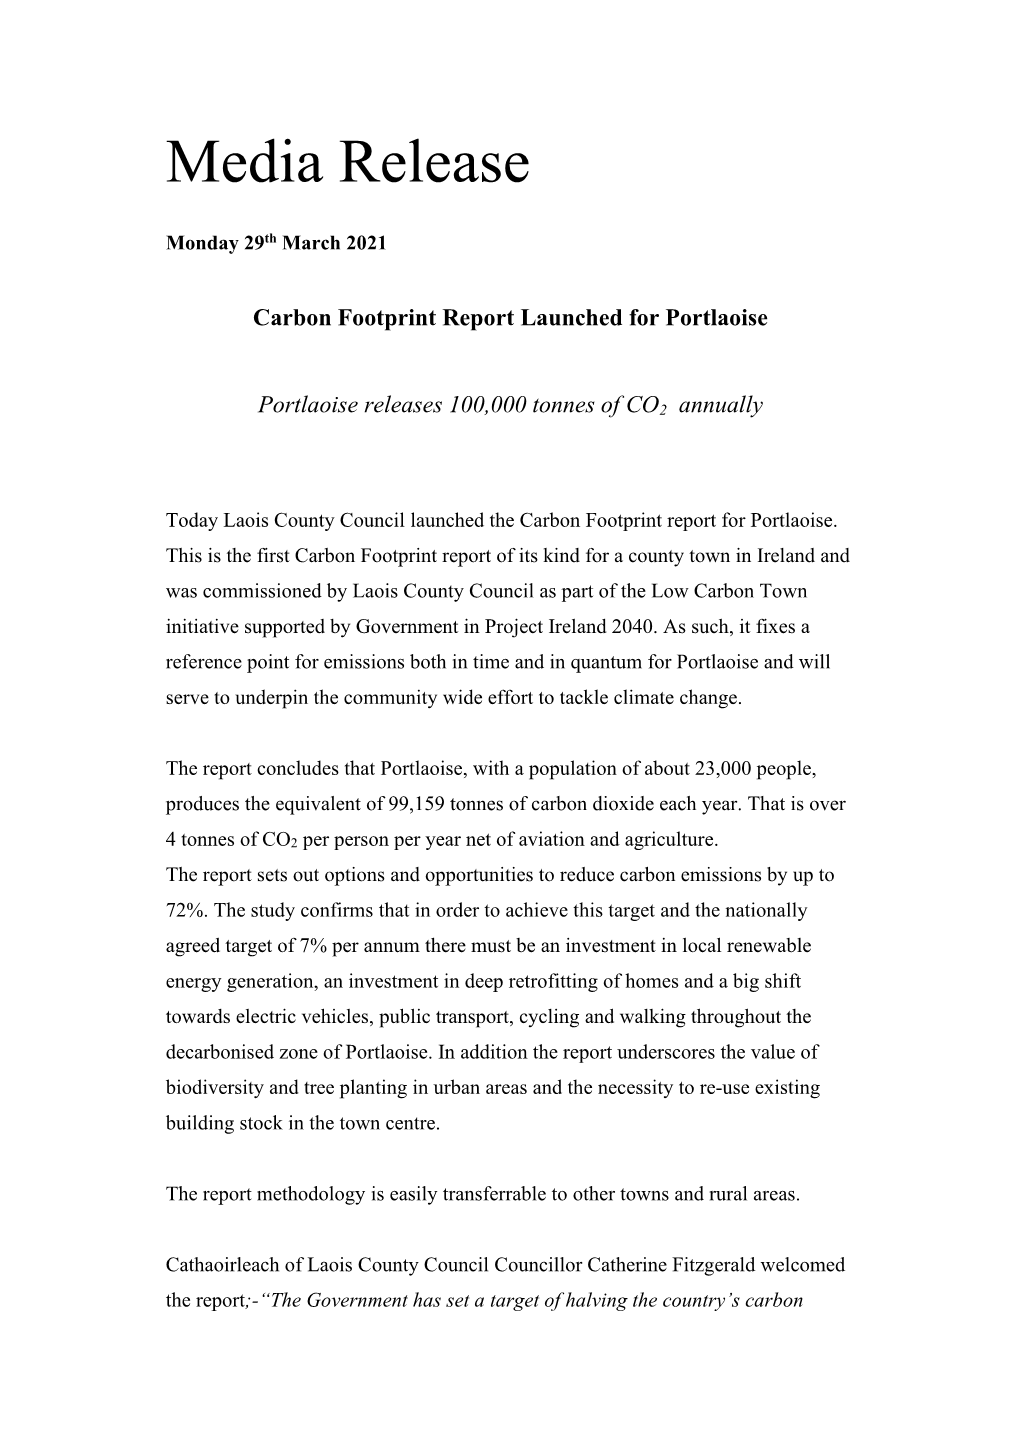 Media Release Portlaoise Carbon Footprint Report 29-03-2021